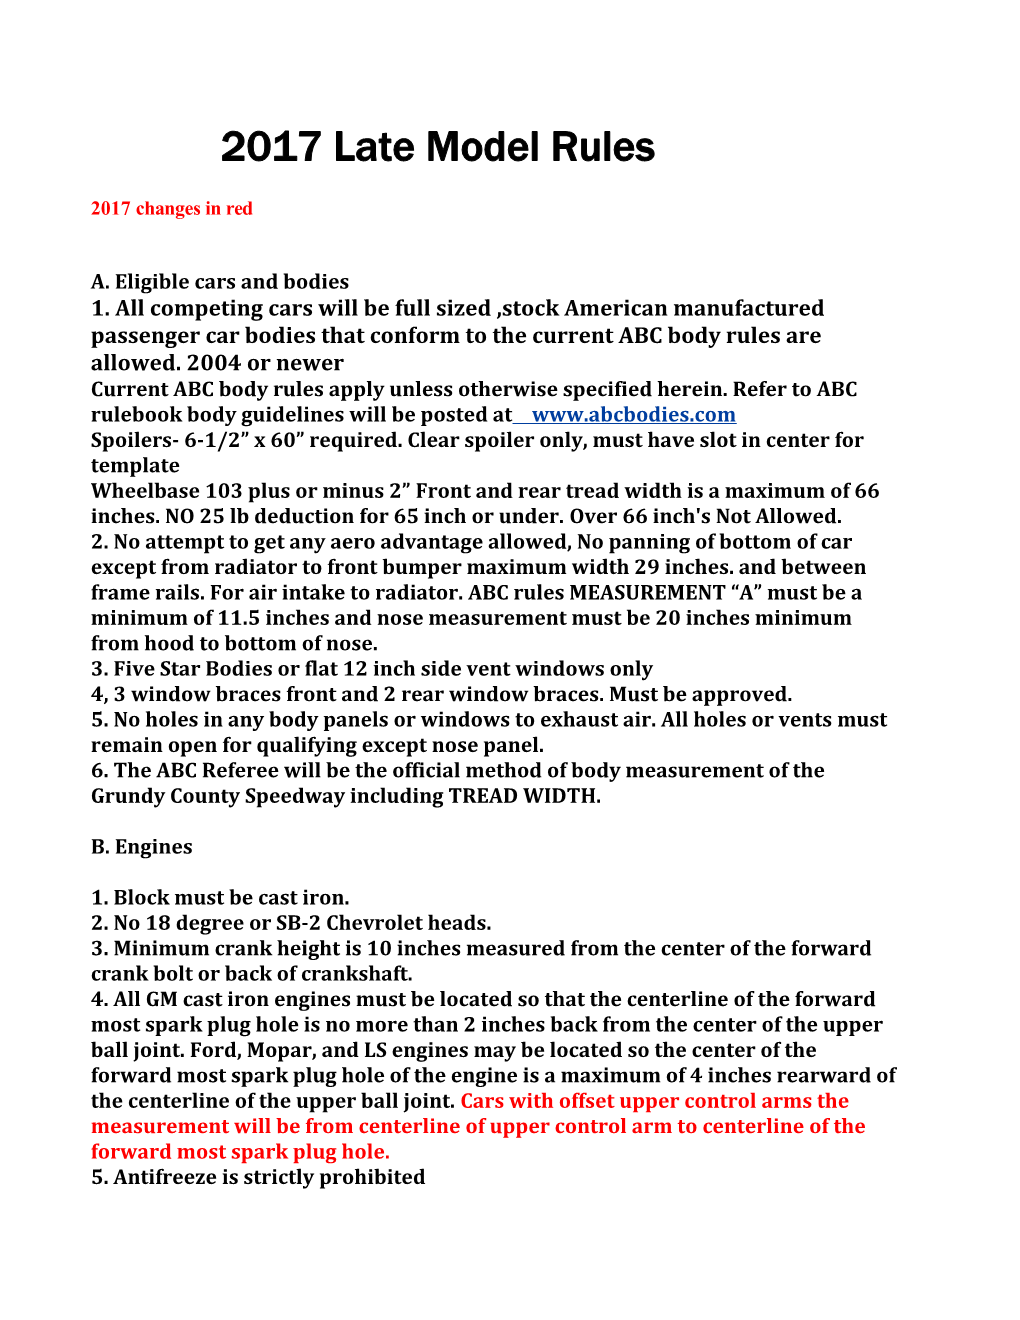 2012 Late Model Rules